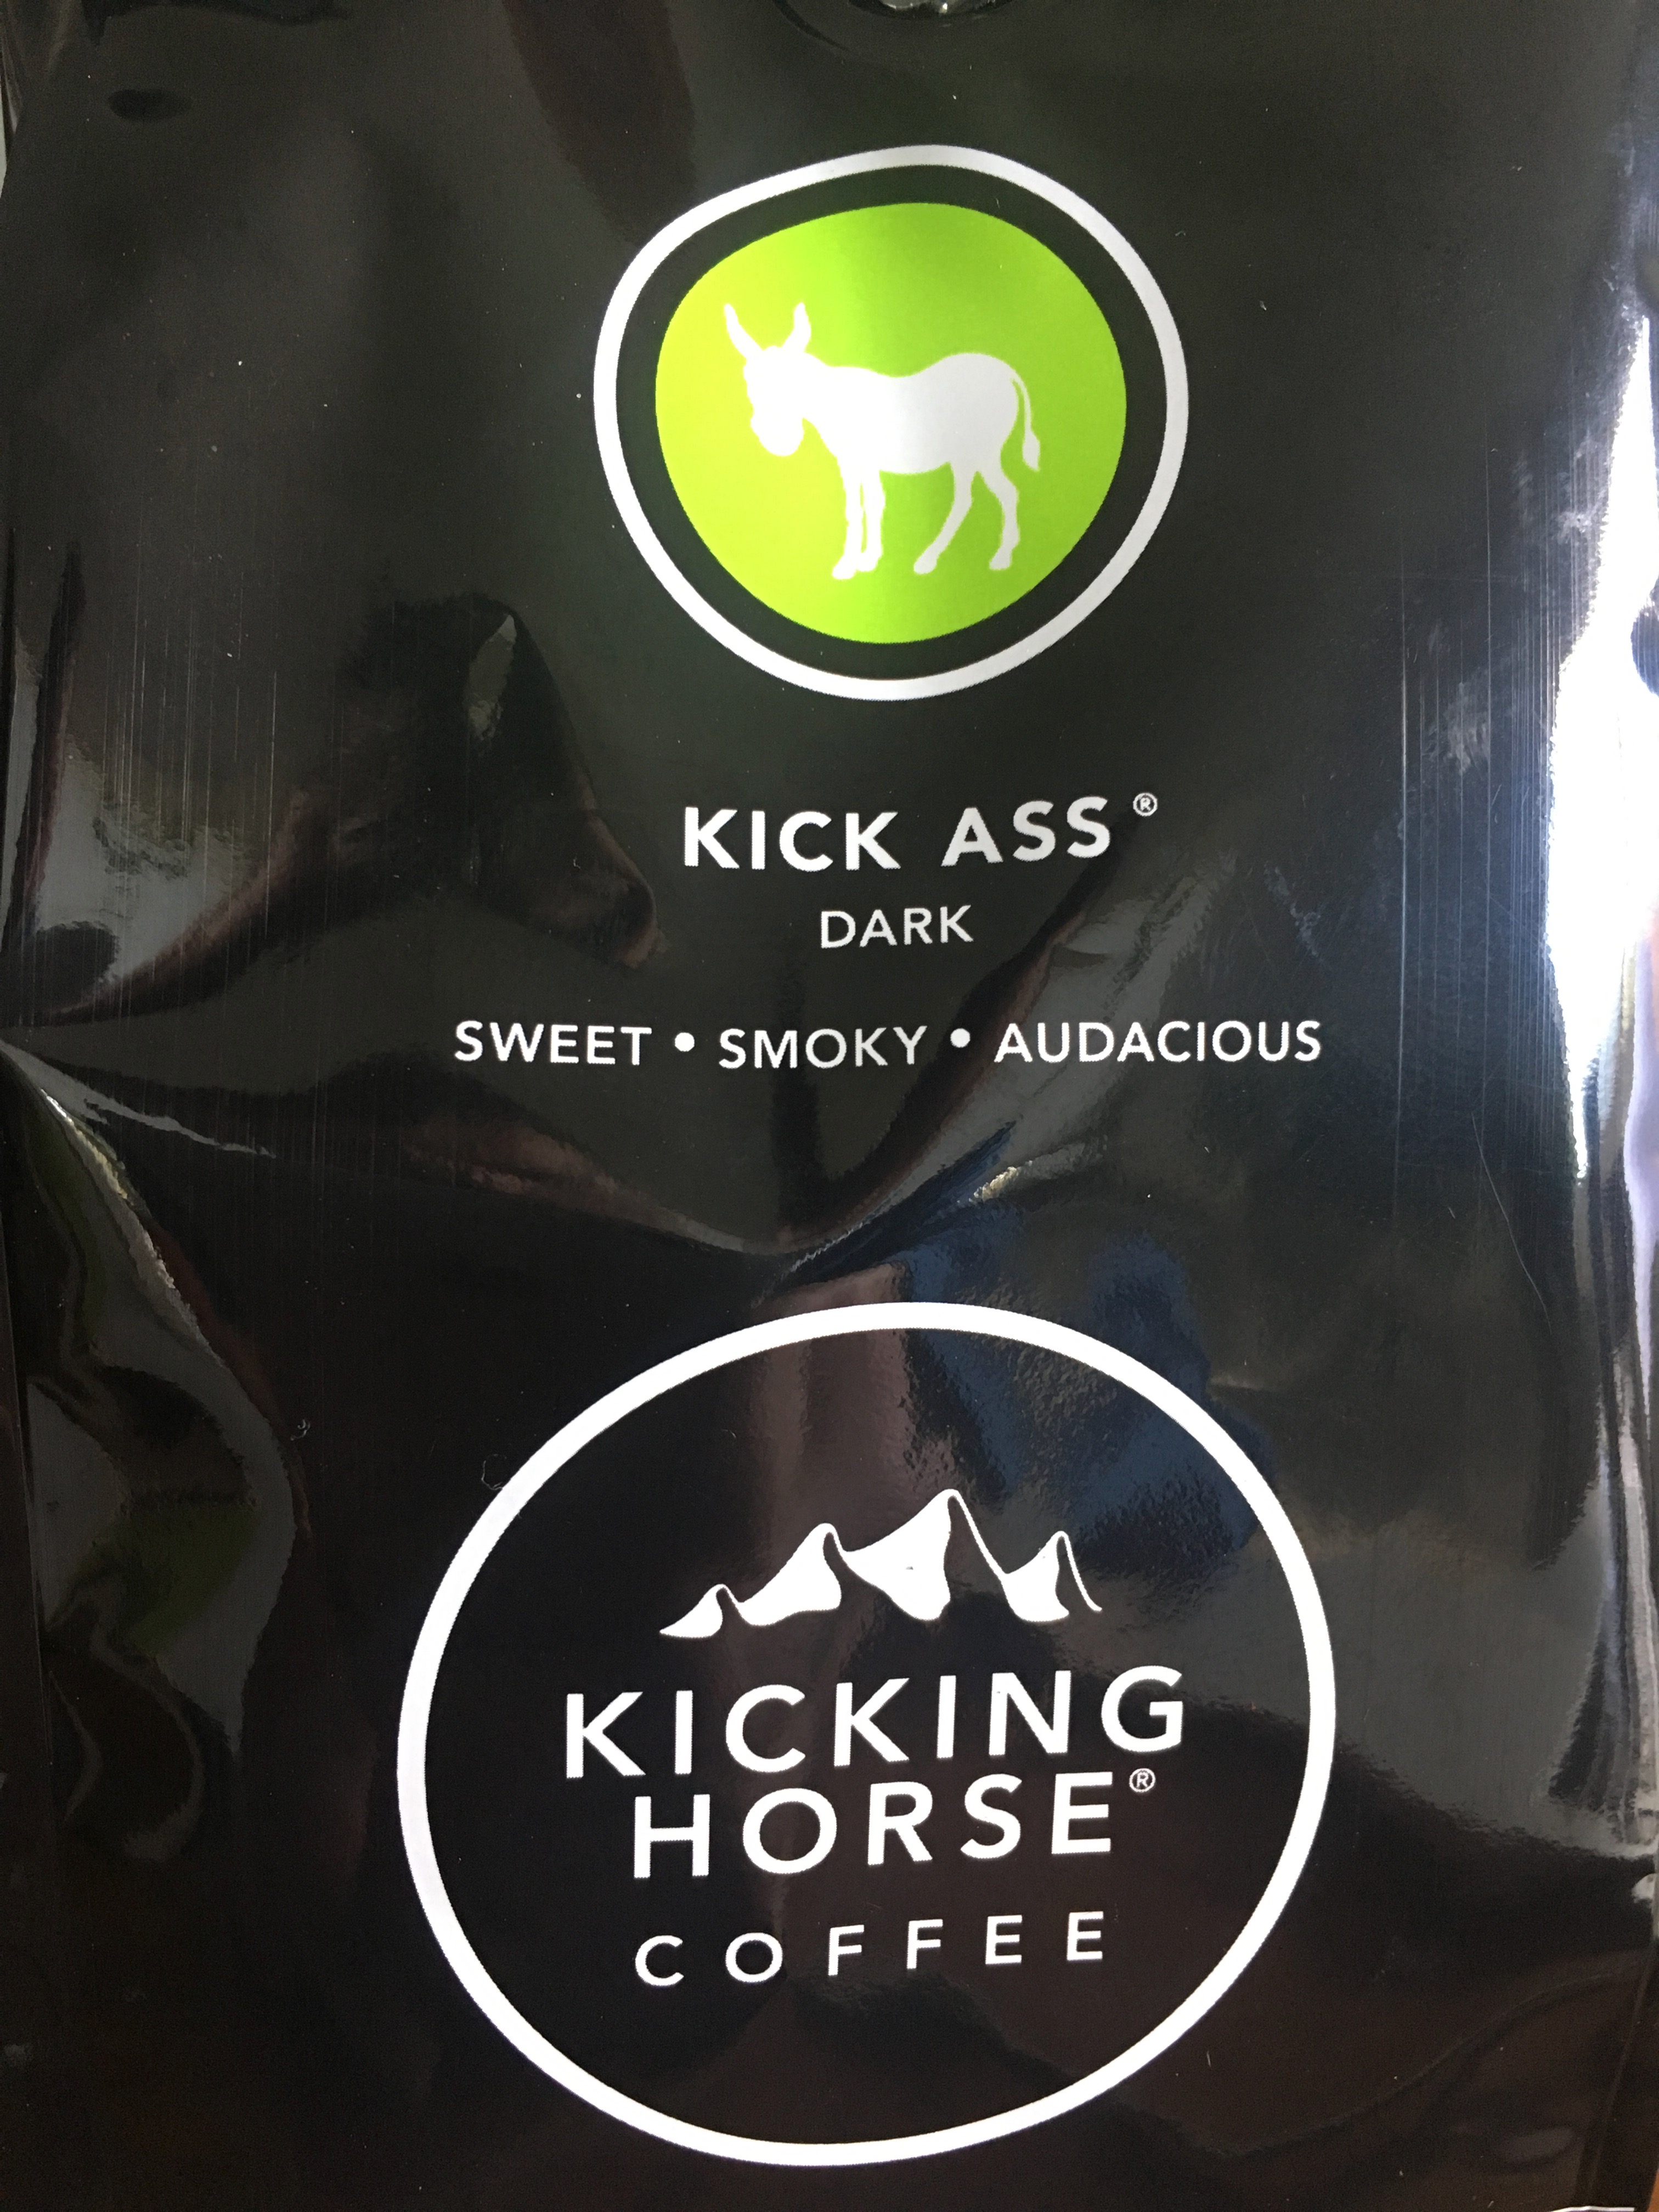 Kicking Horse Coffee - getting hot!